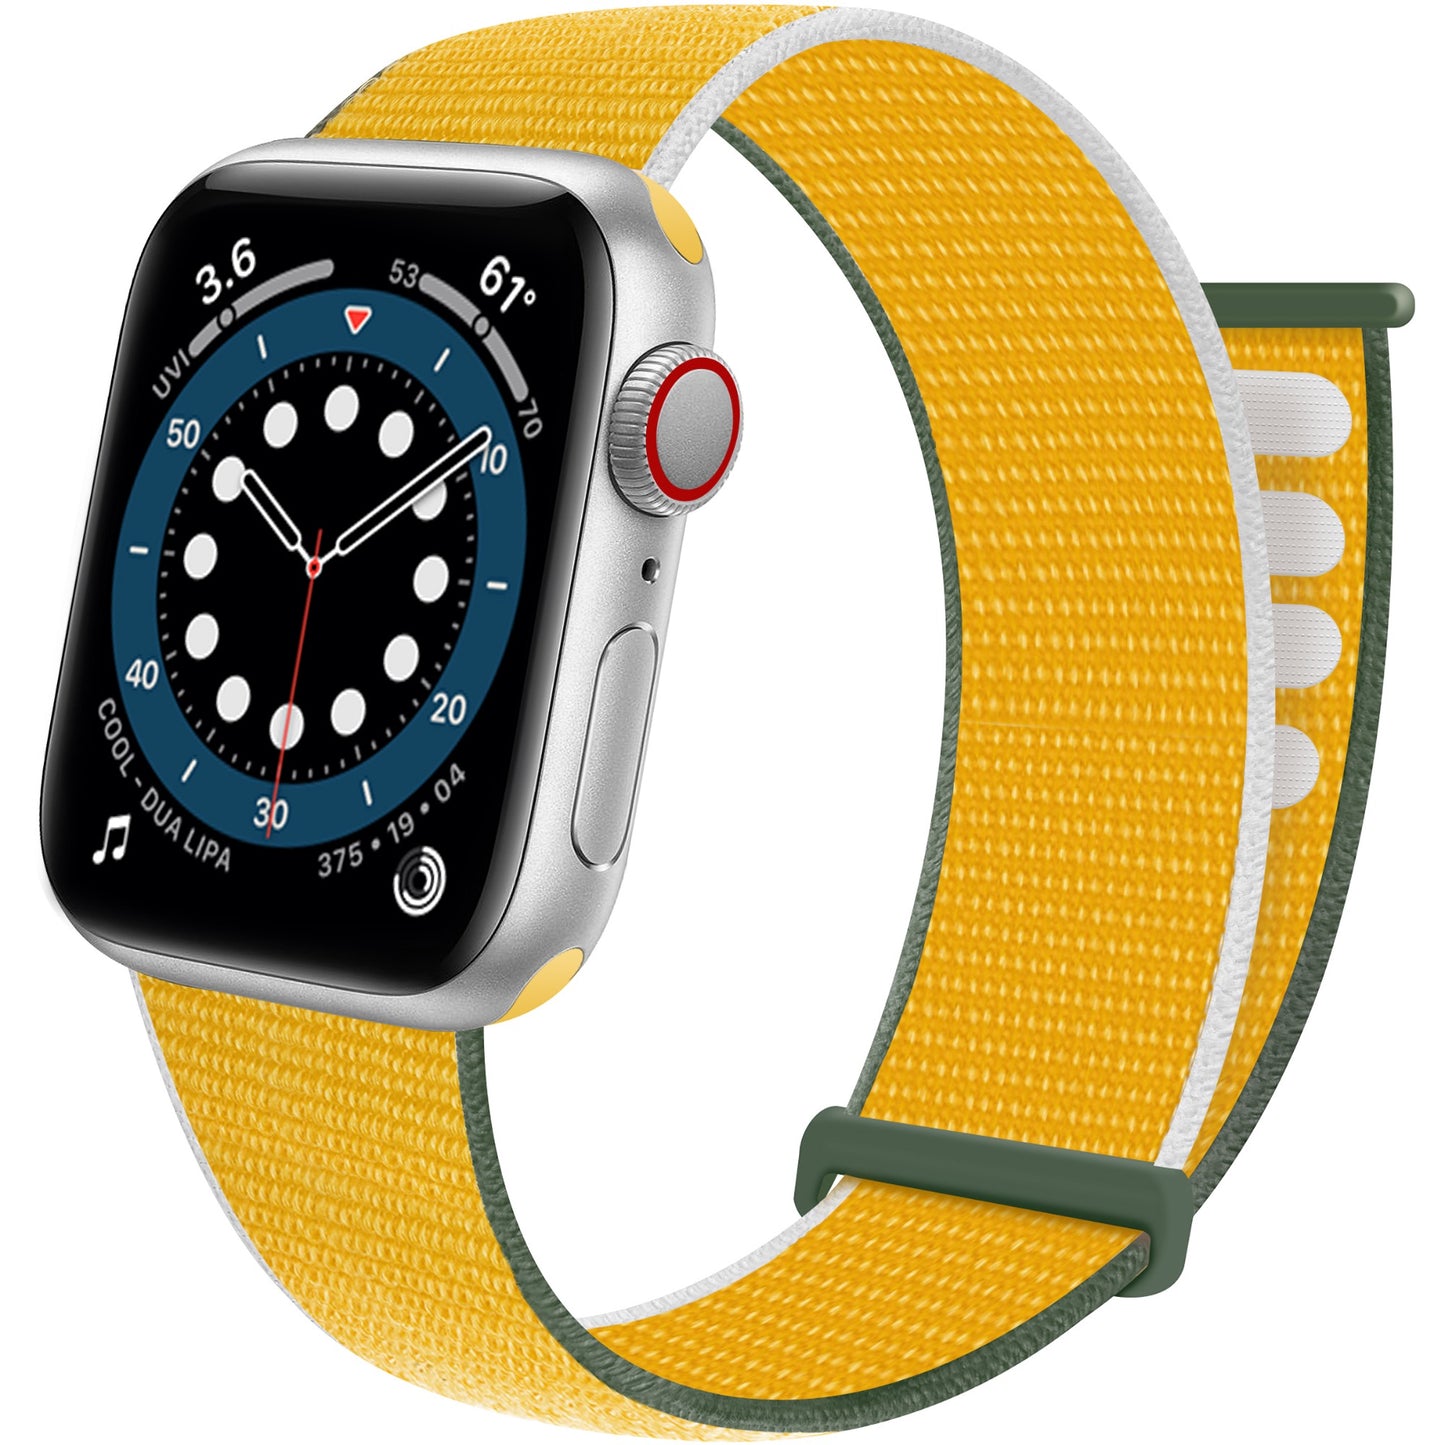 arktisband Apple Watch Sport Loop Armband